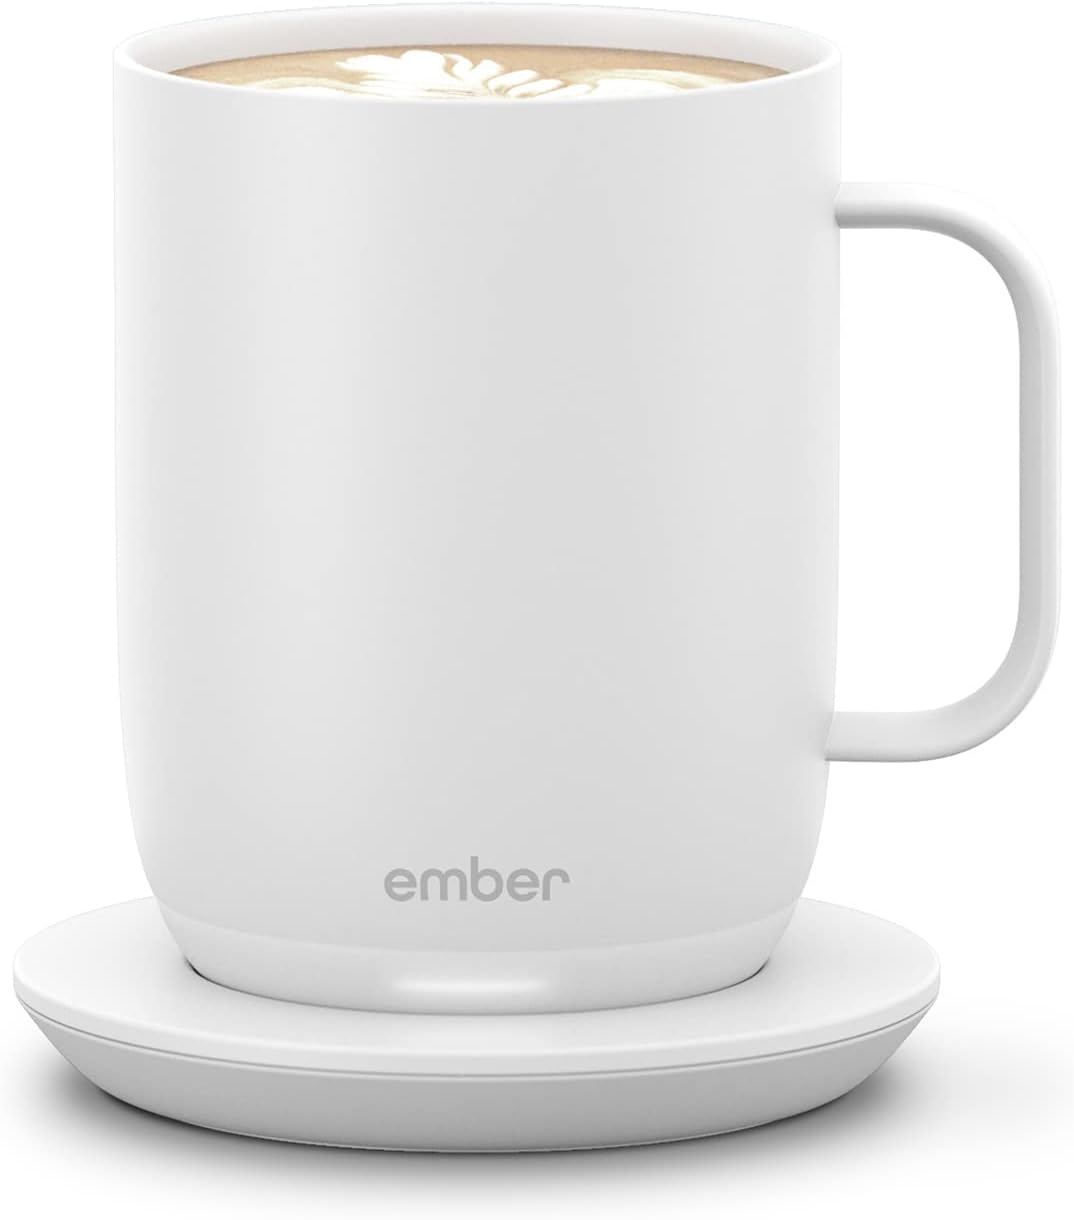 Temperature Control Smart Mug 2, 14 Oz Heated Coffee Mug, App-Controlled 